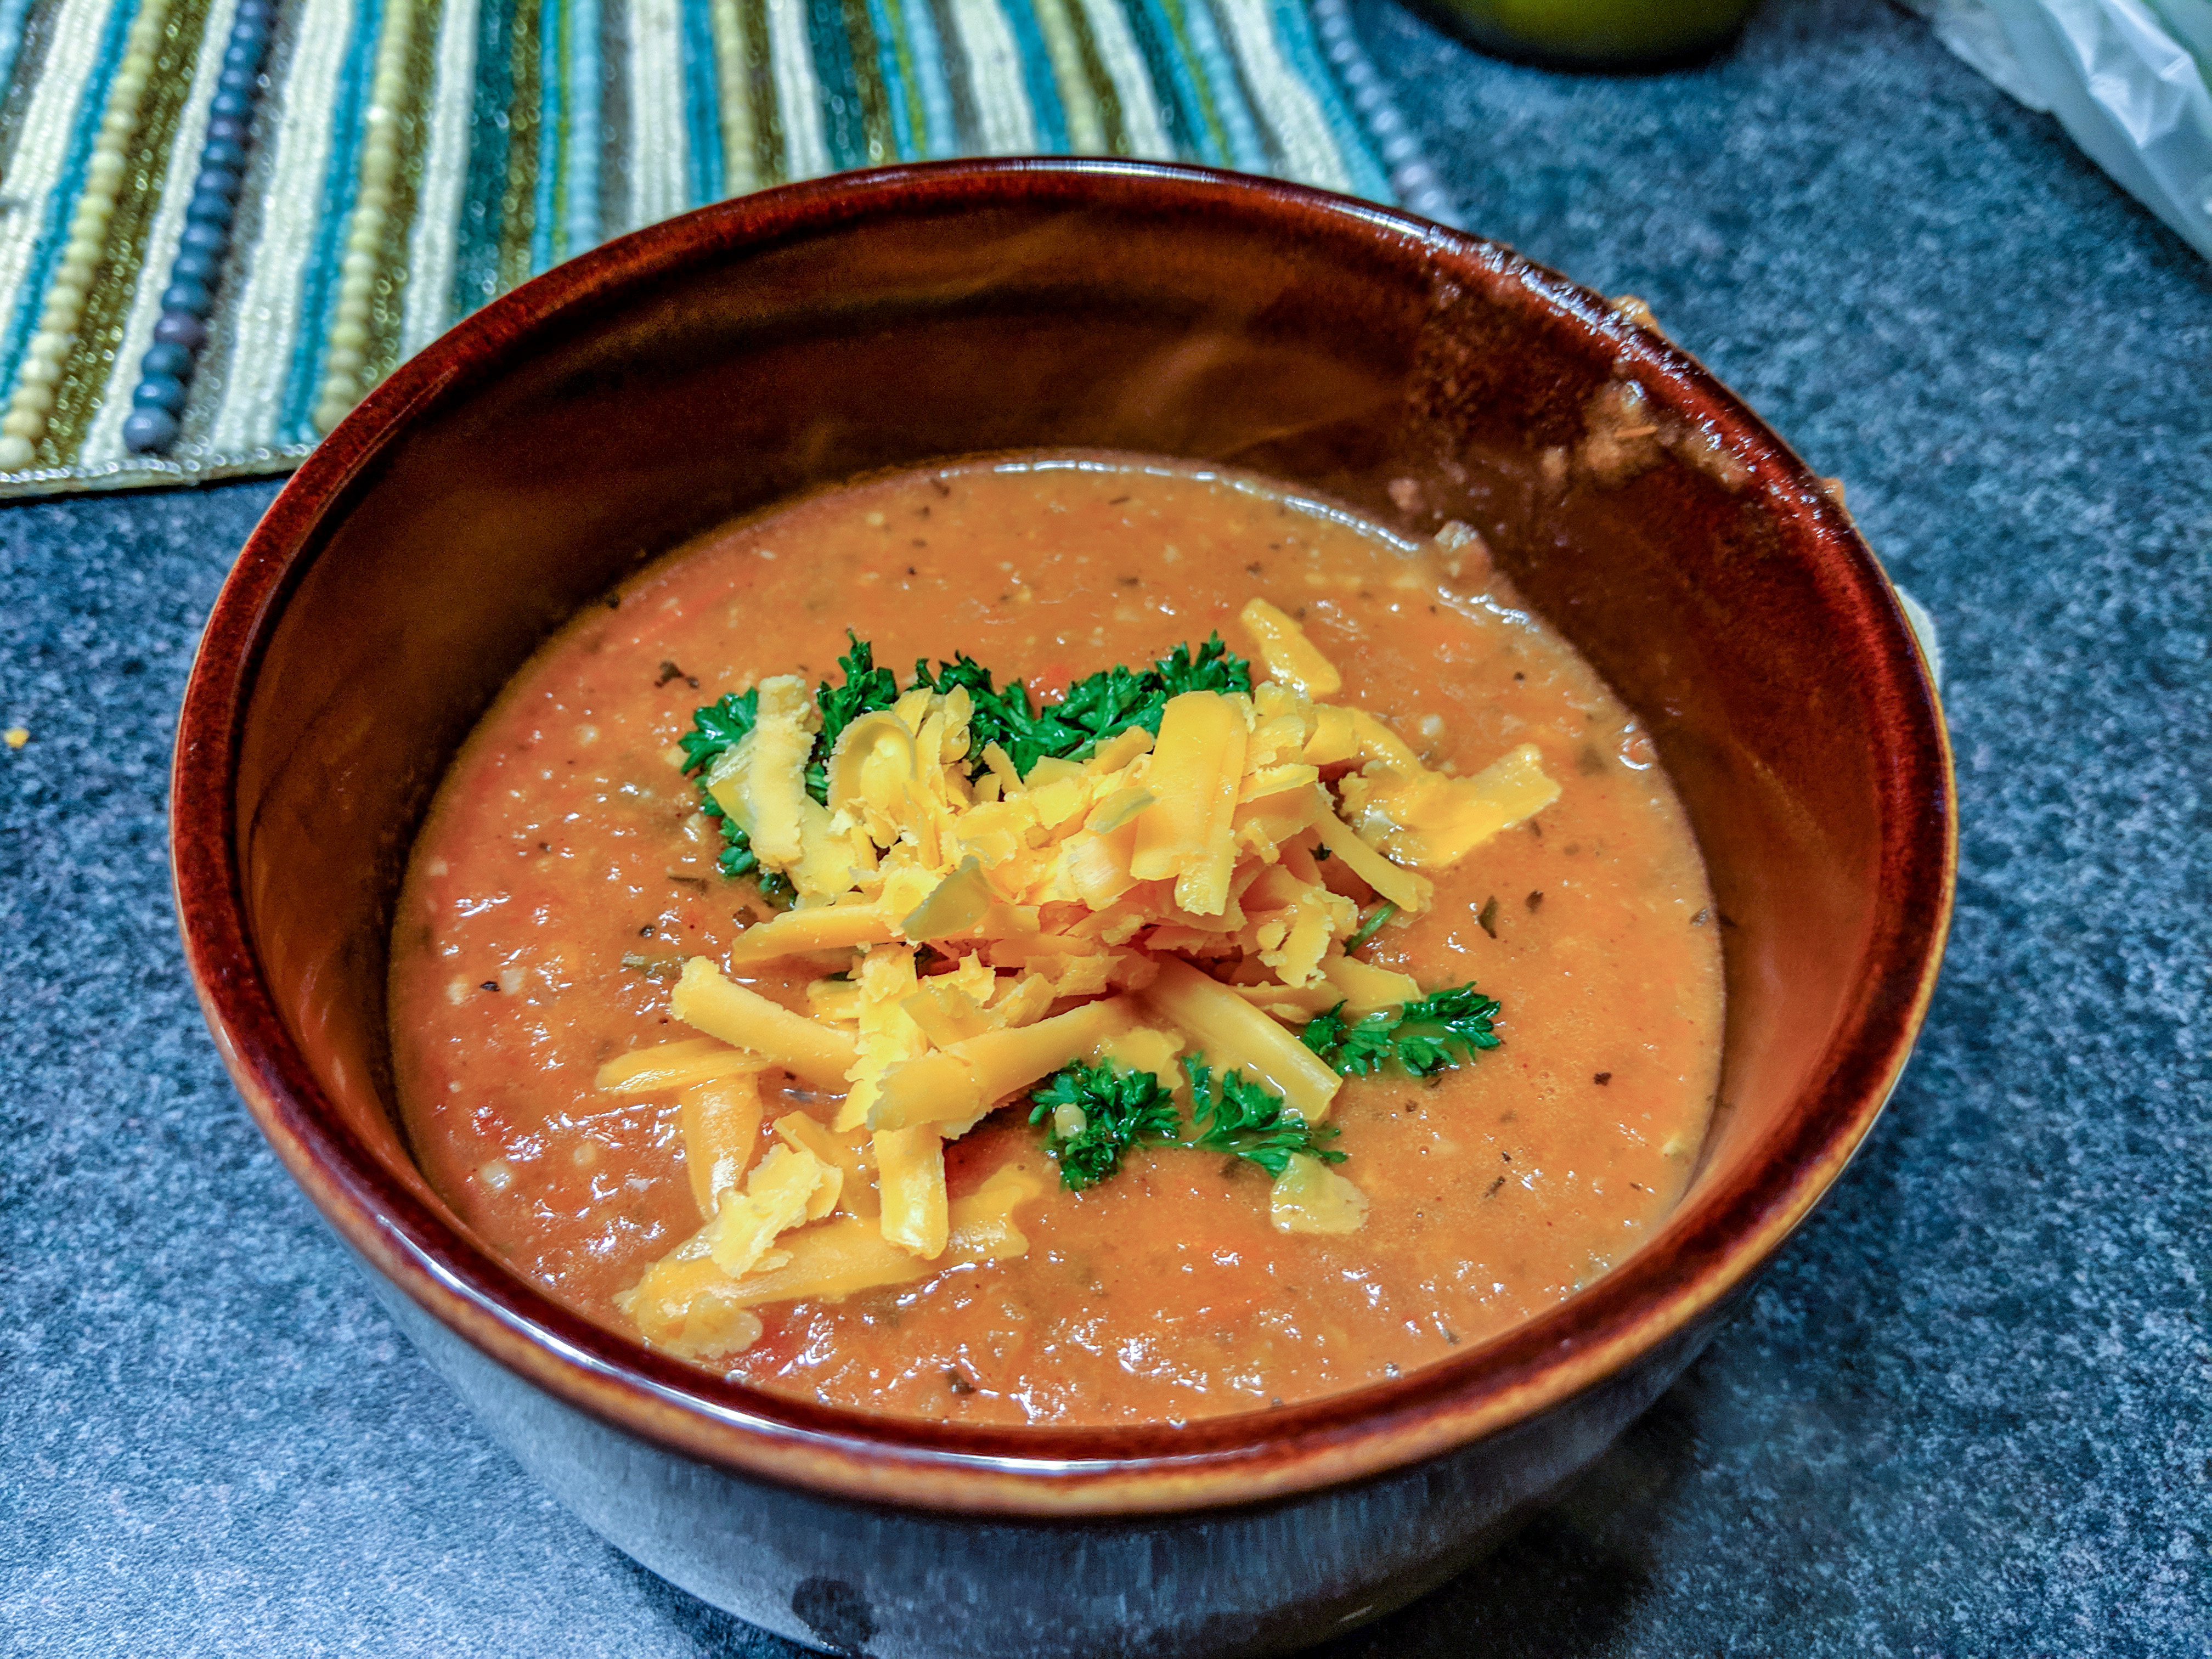 a bowl of hearty tomato soup